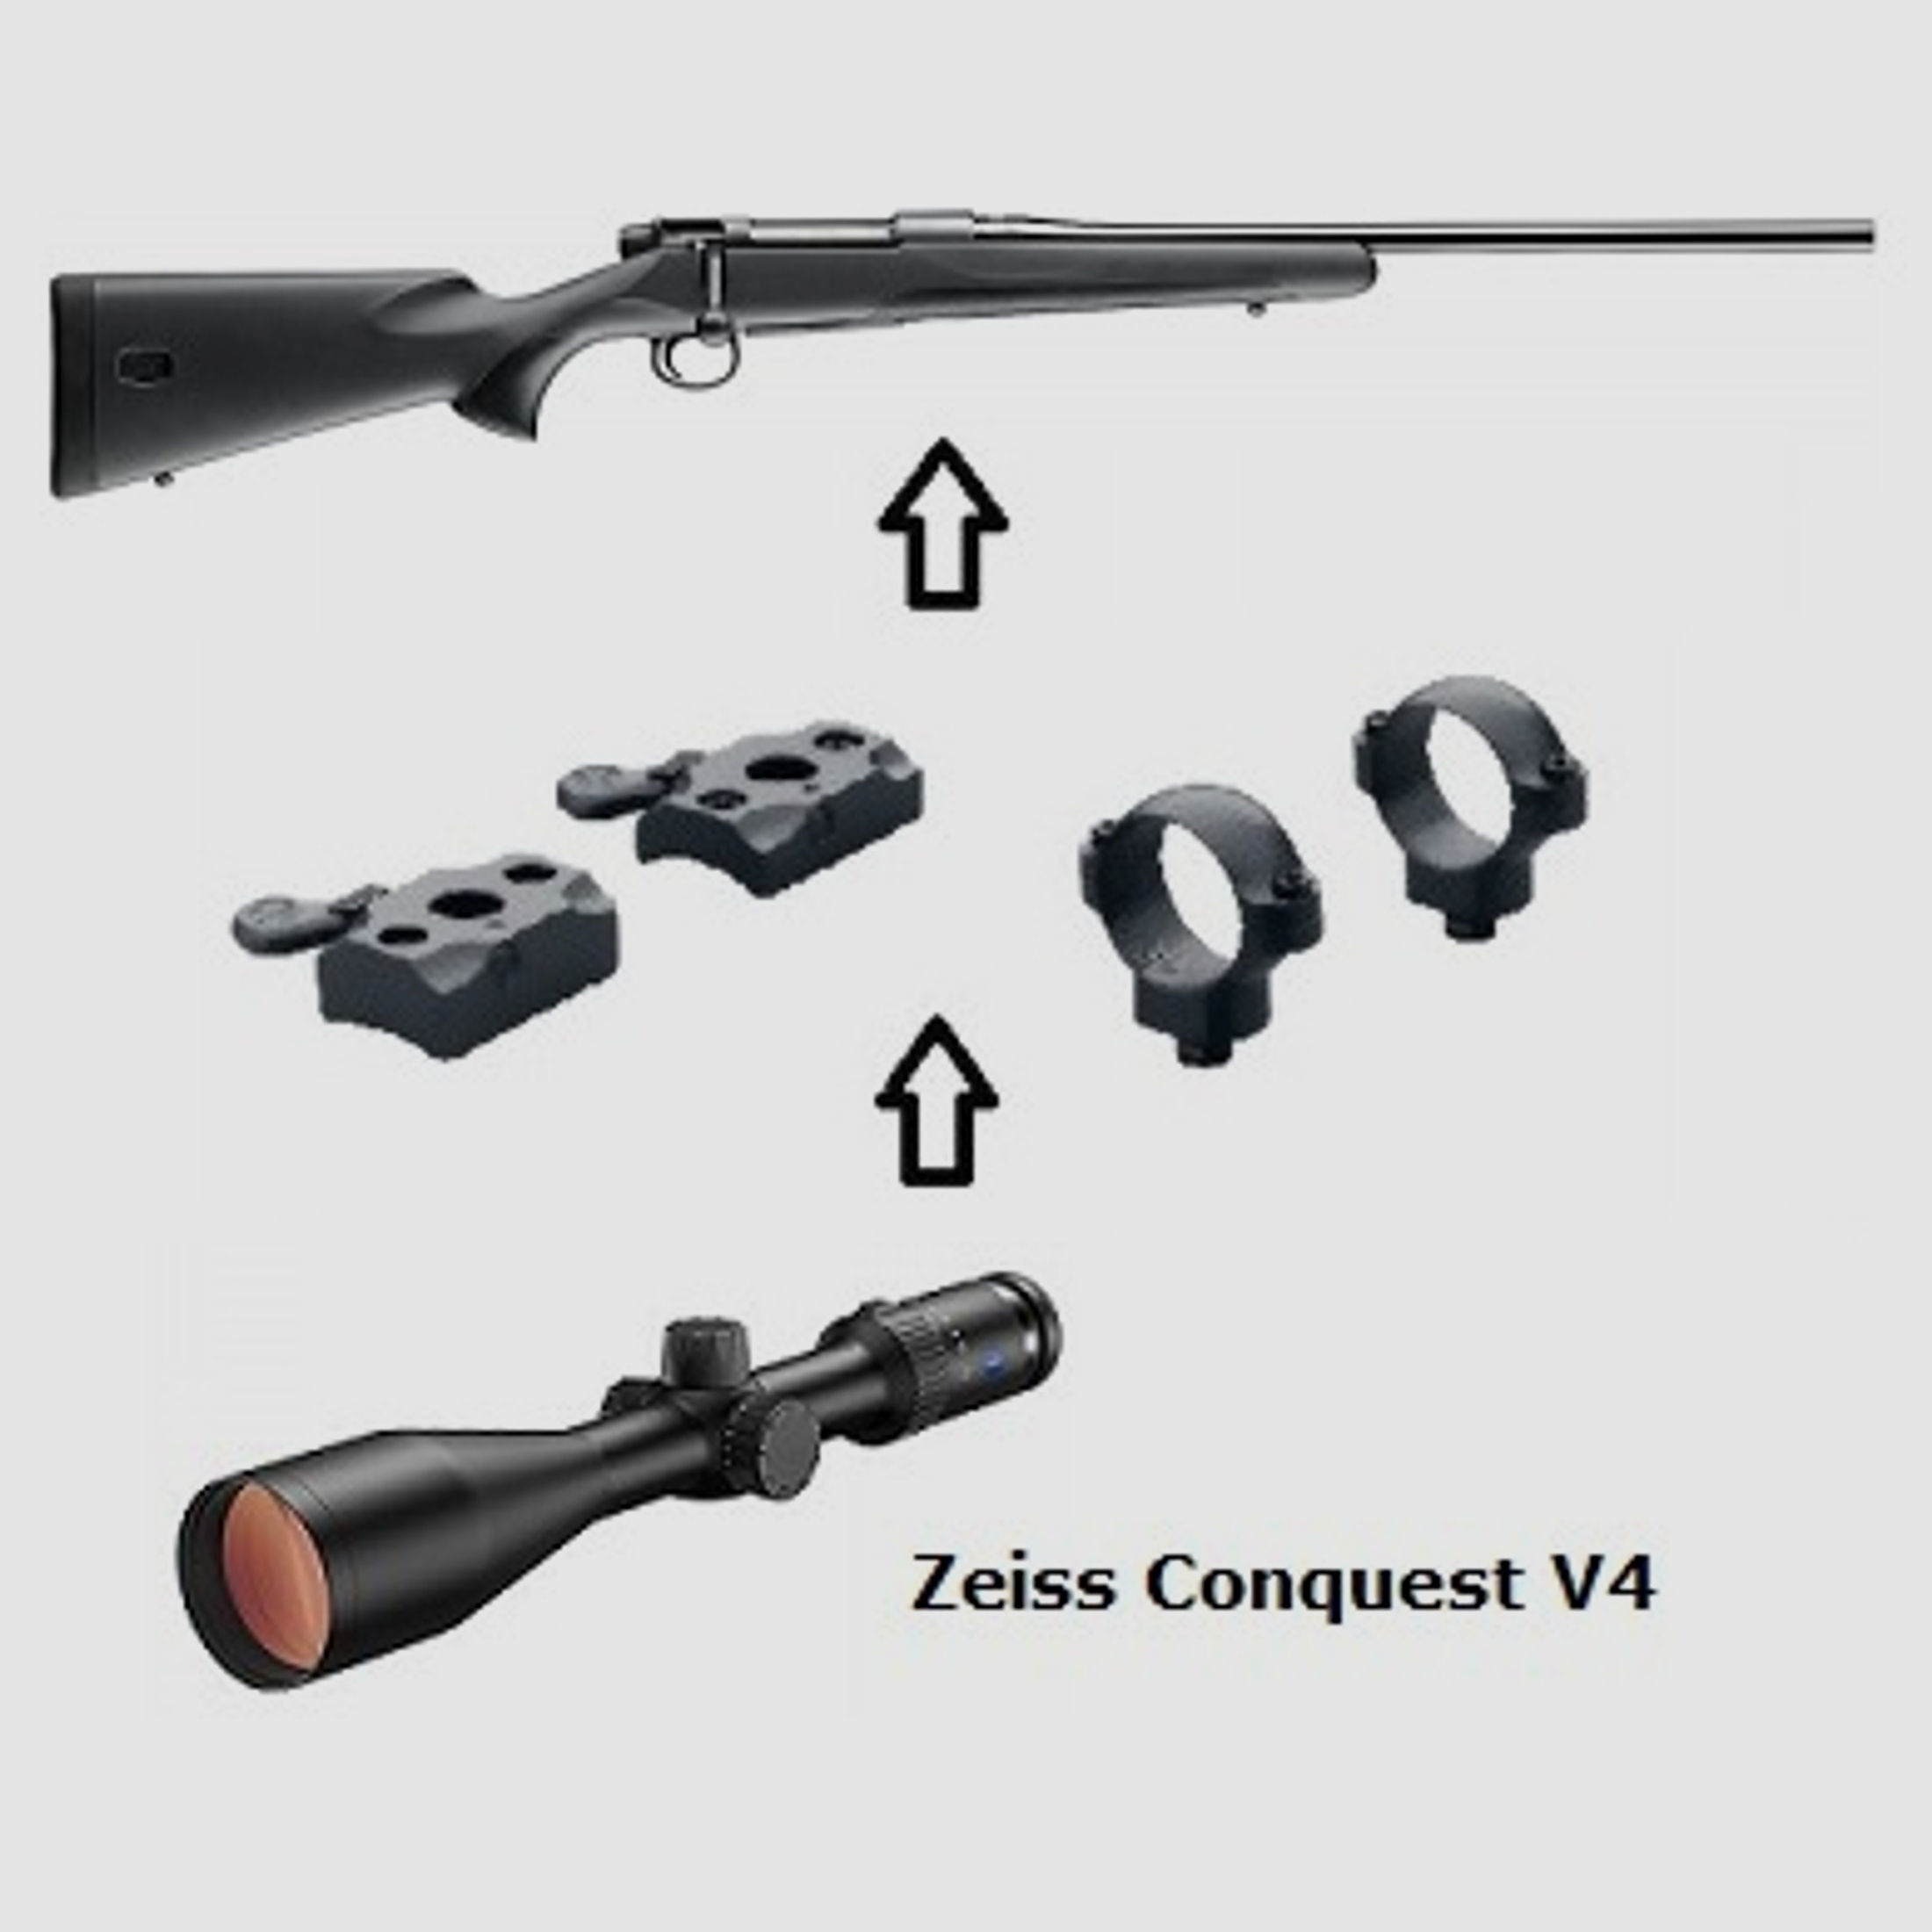 Mauser M18 + Zeiss Conquest V4 3-12x56 + Montage + ... Komplettpaket